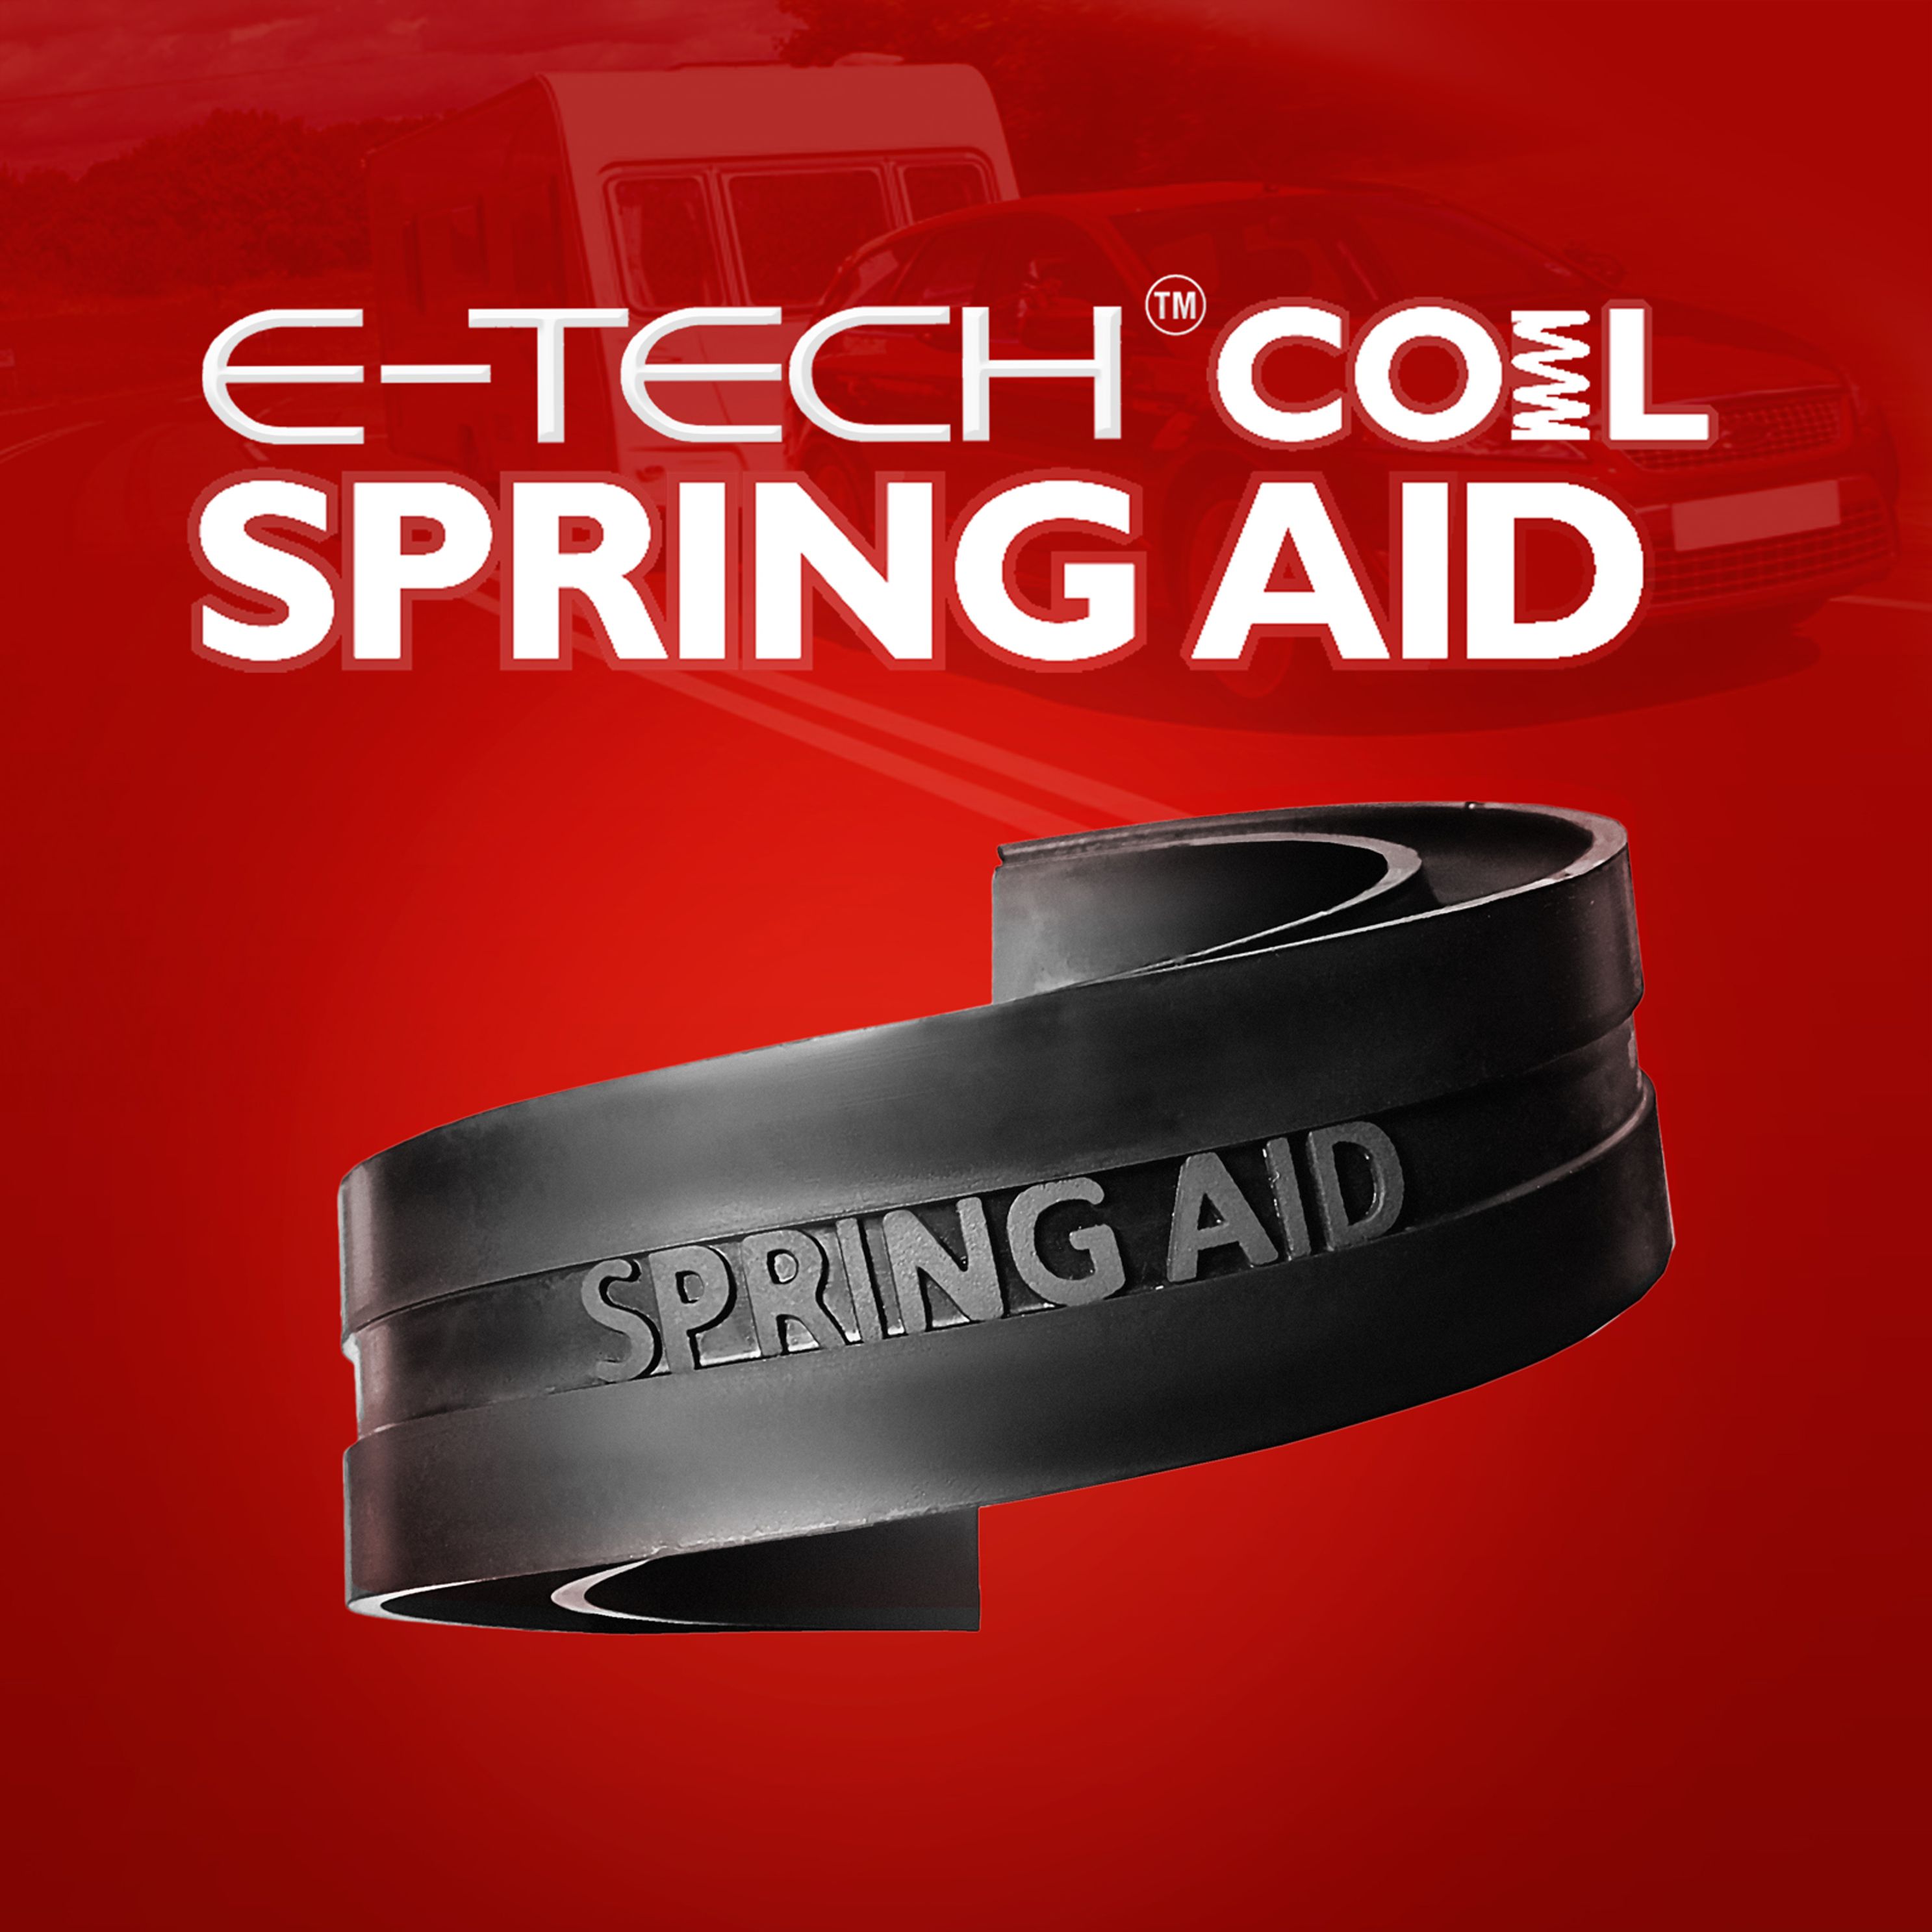 E-TECH Spring Aid.5.1600.jpg 1